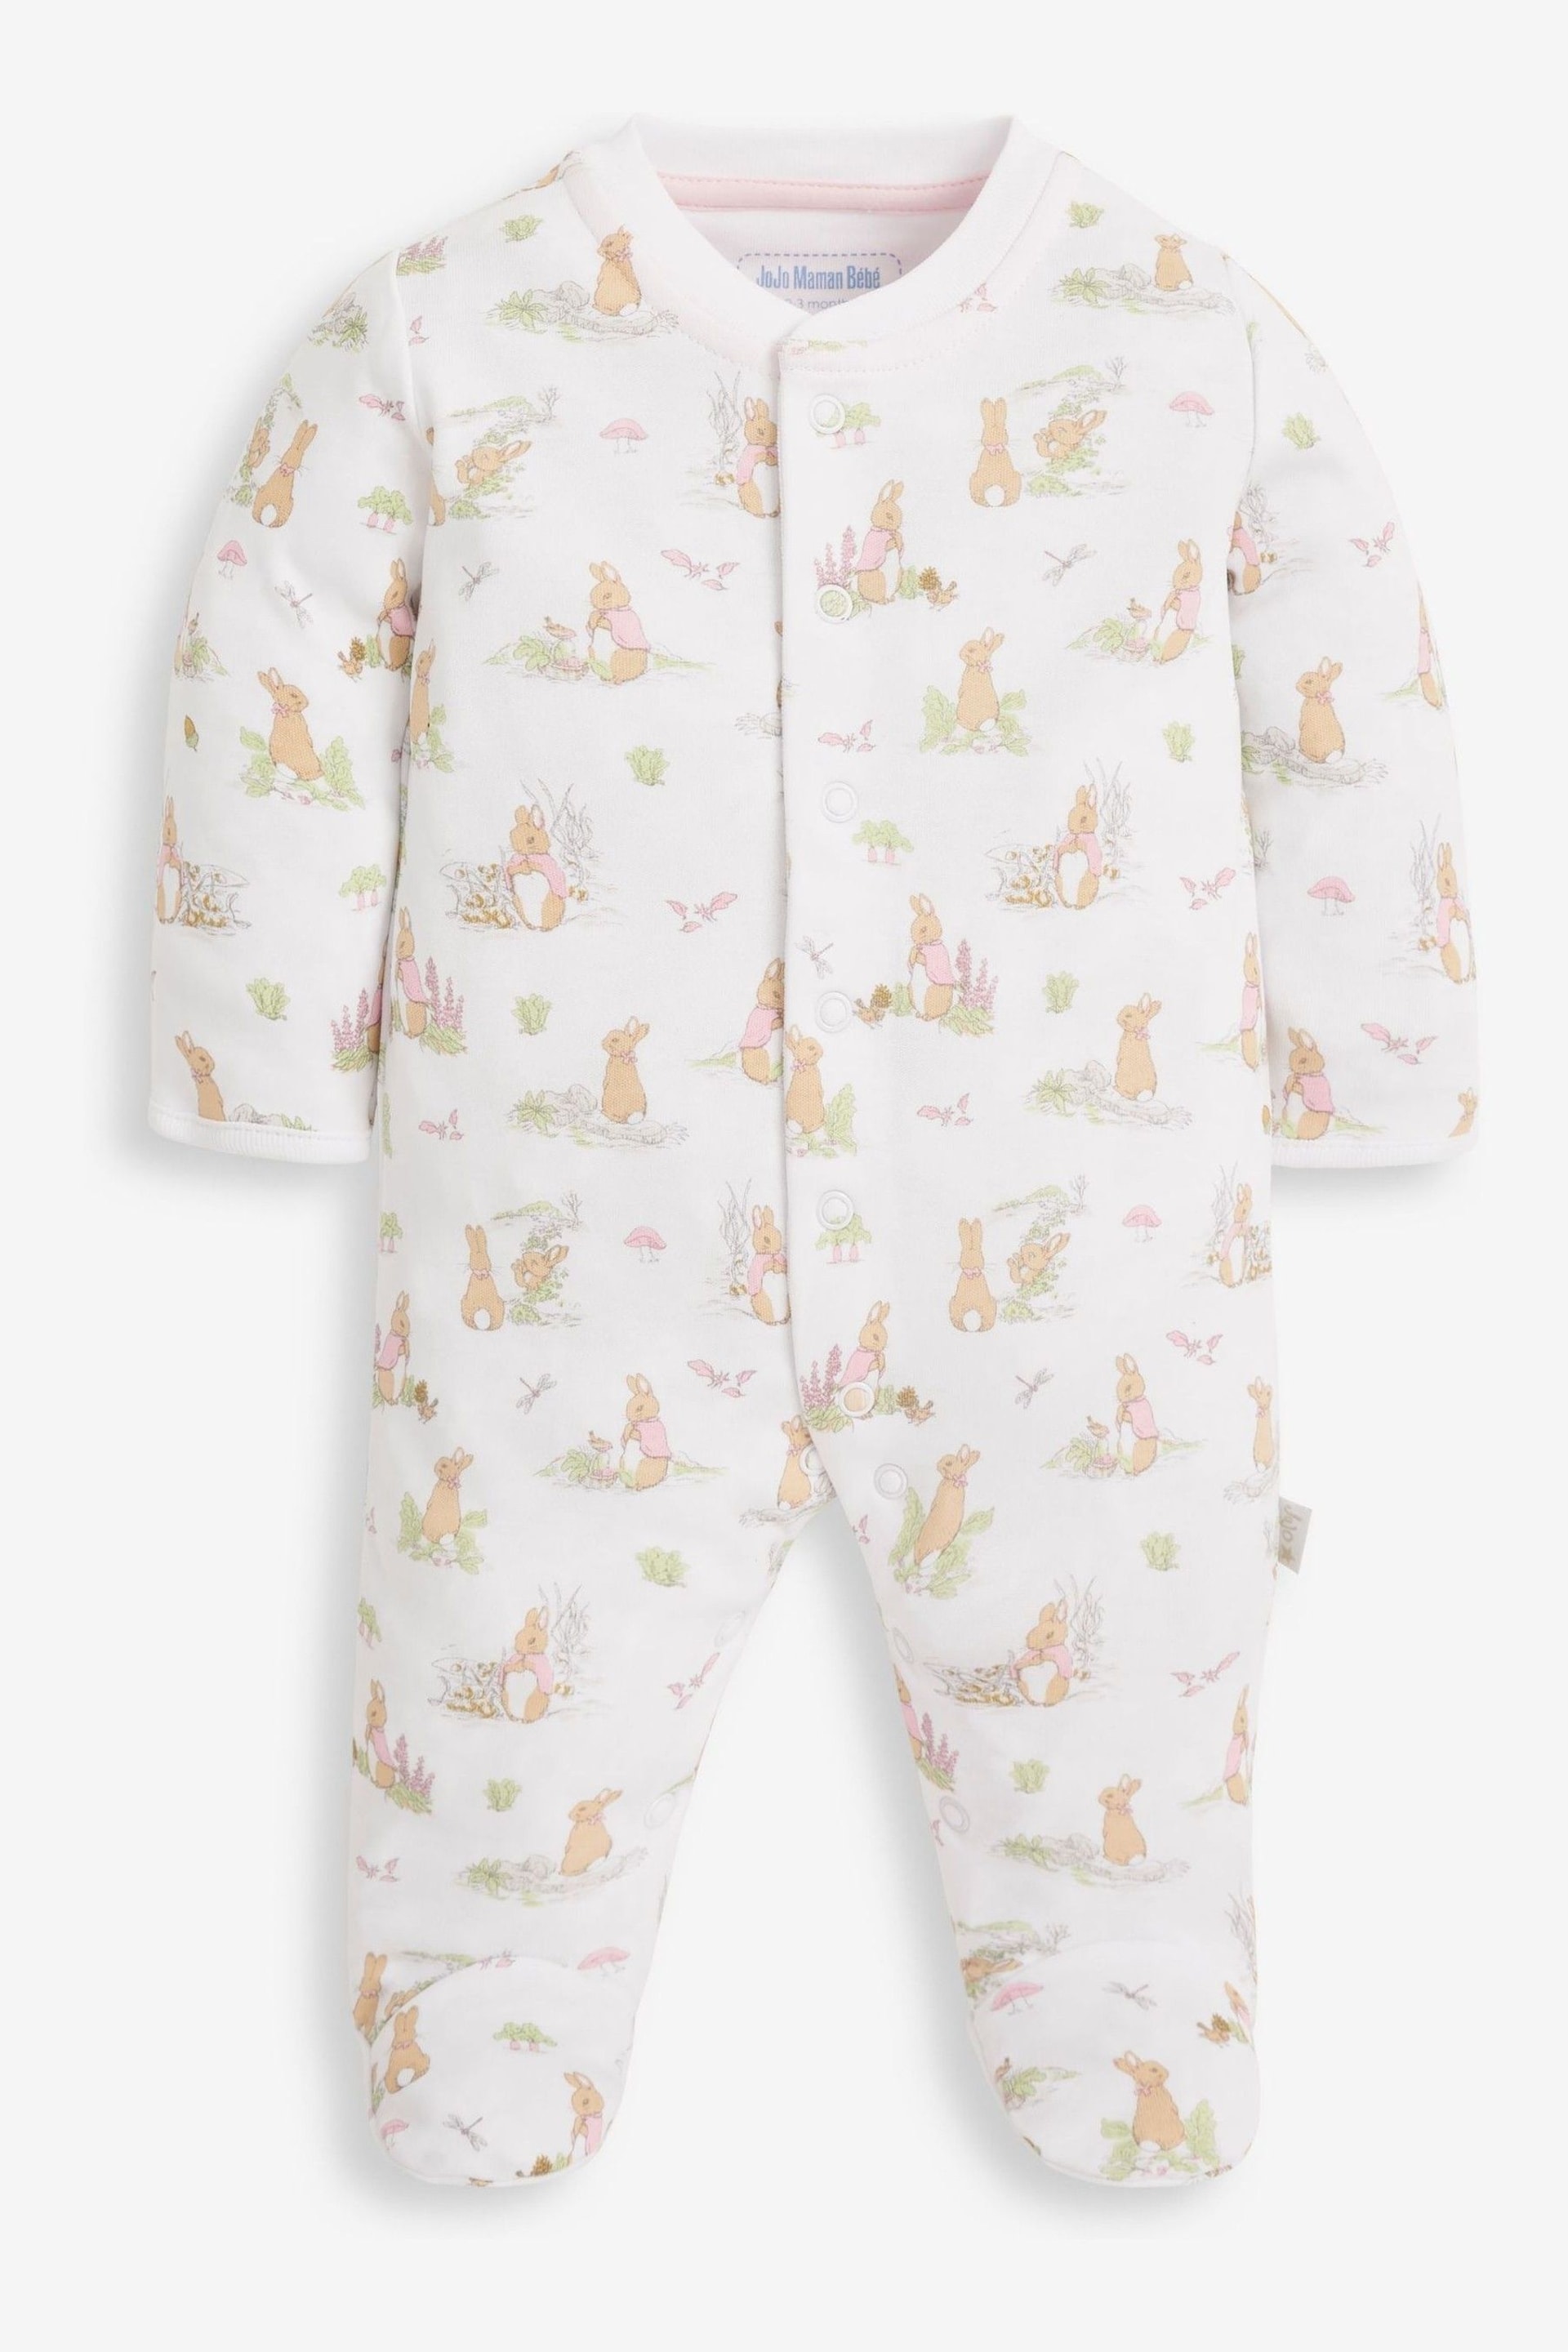 JoJo Maman Bébé Pink 3-Piece Flopsy Bunny Sleepsuit, Jacket & Hat Set - Image 5 of 9